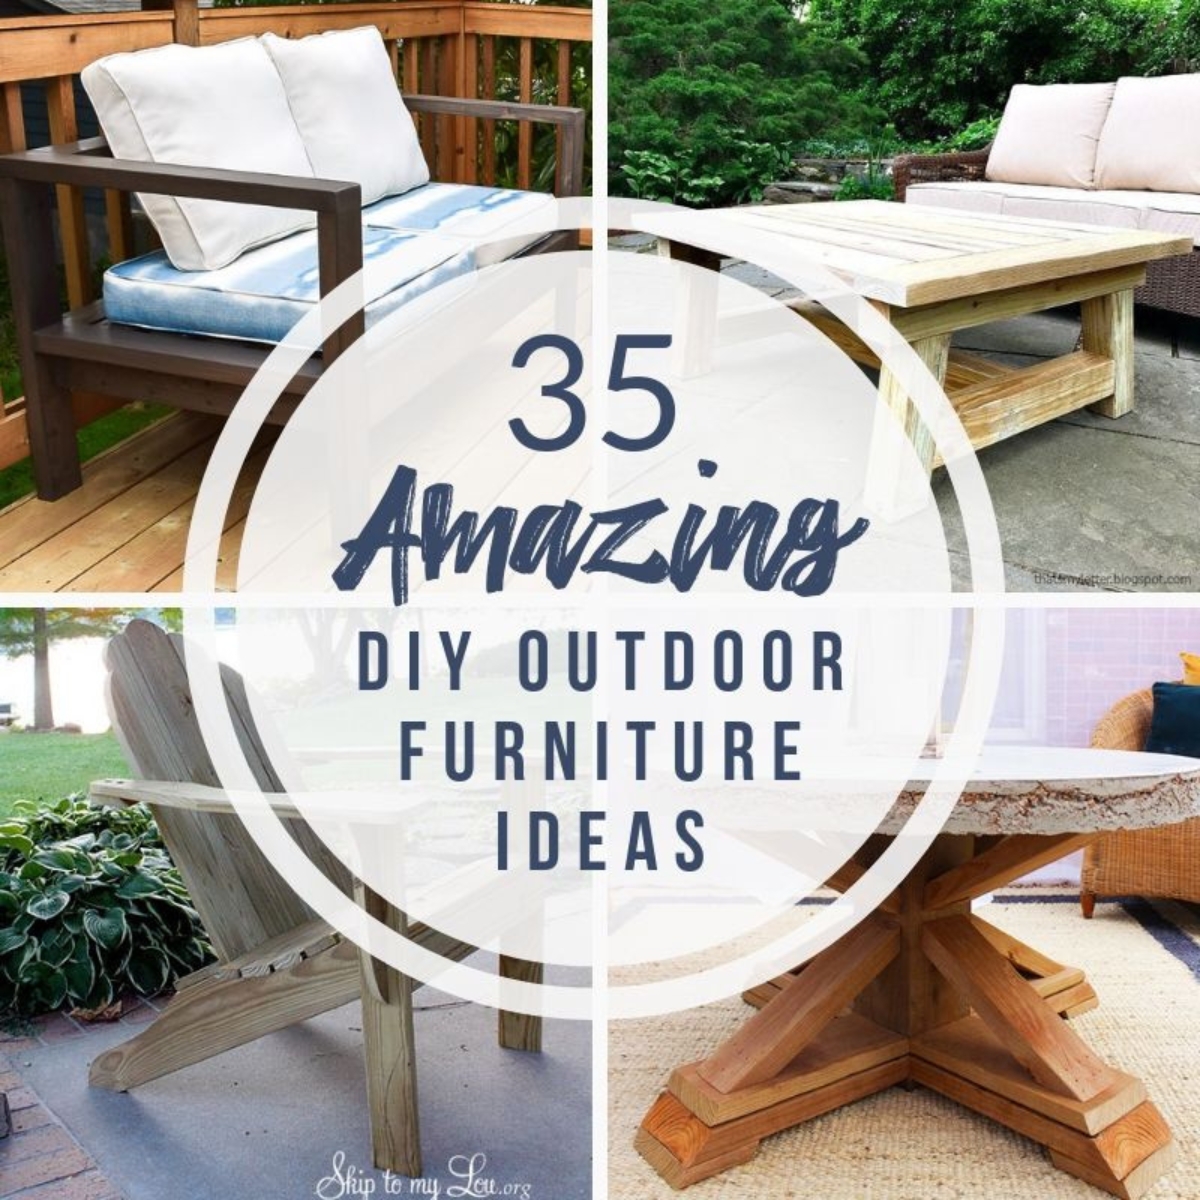 DIY outdoor furniture plans